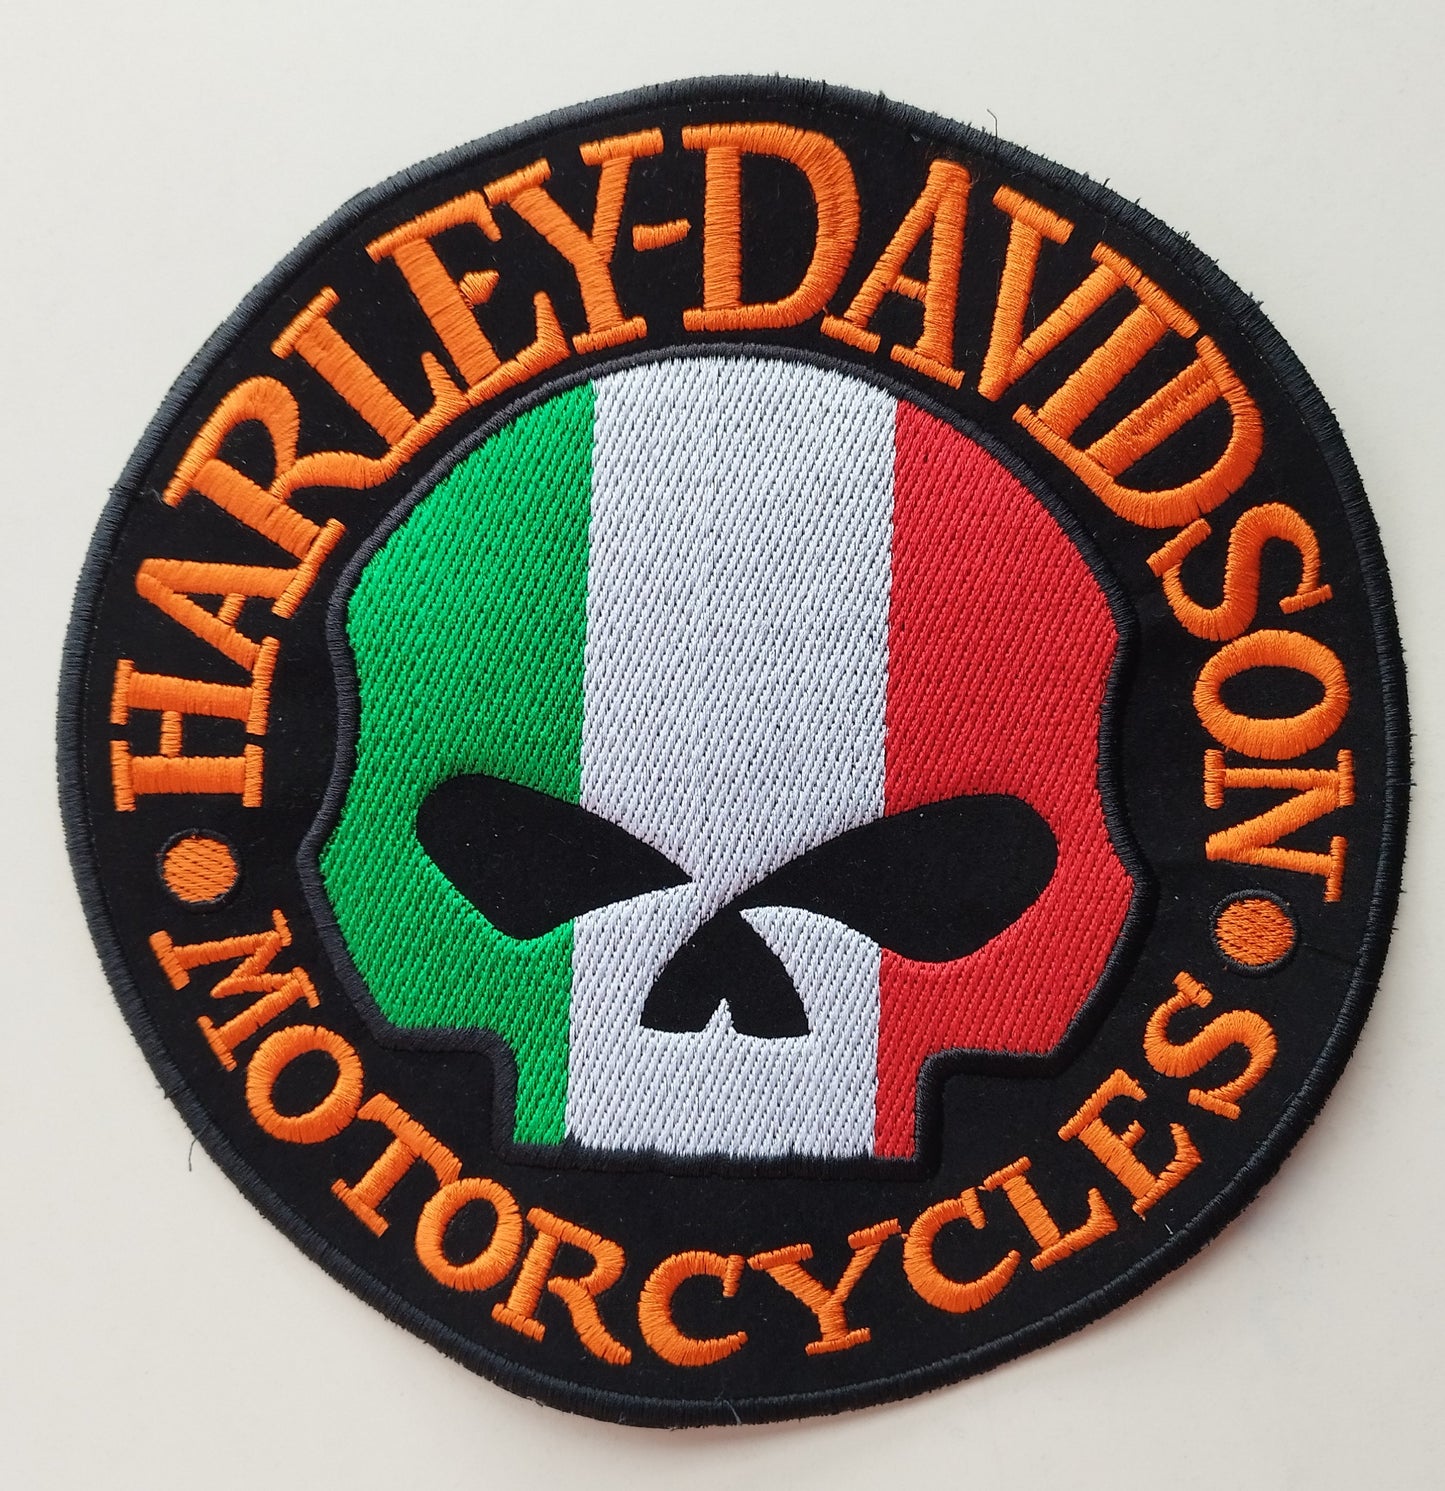 Grande patch toppa SKULL HD Motorcycles scritta arancio, bandiera italiana